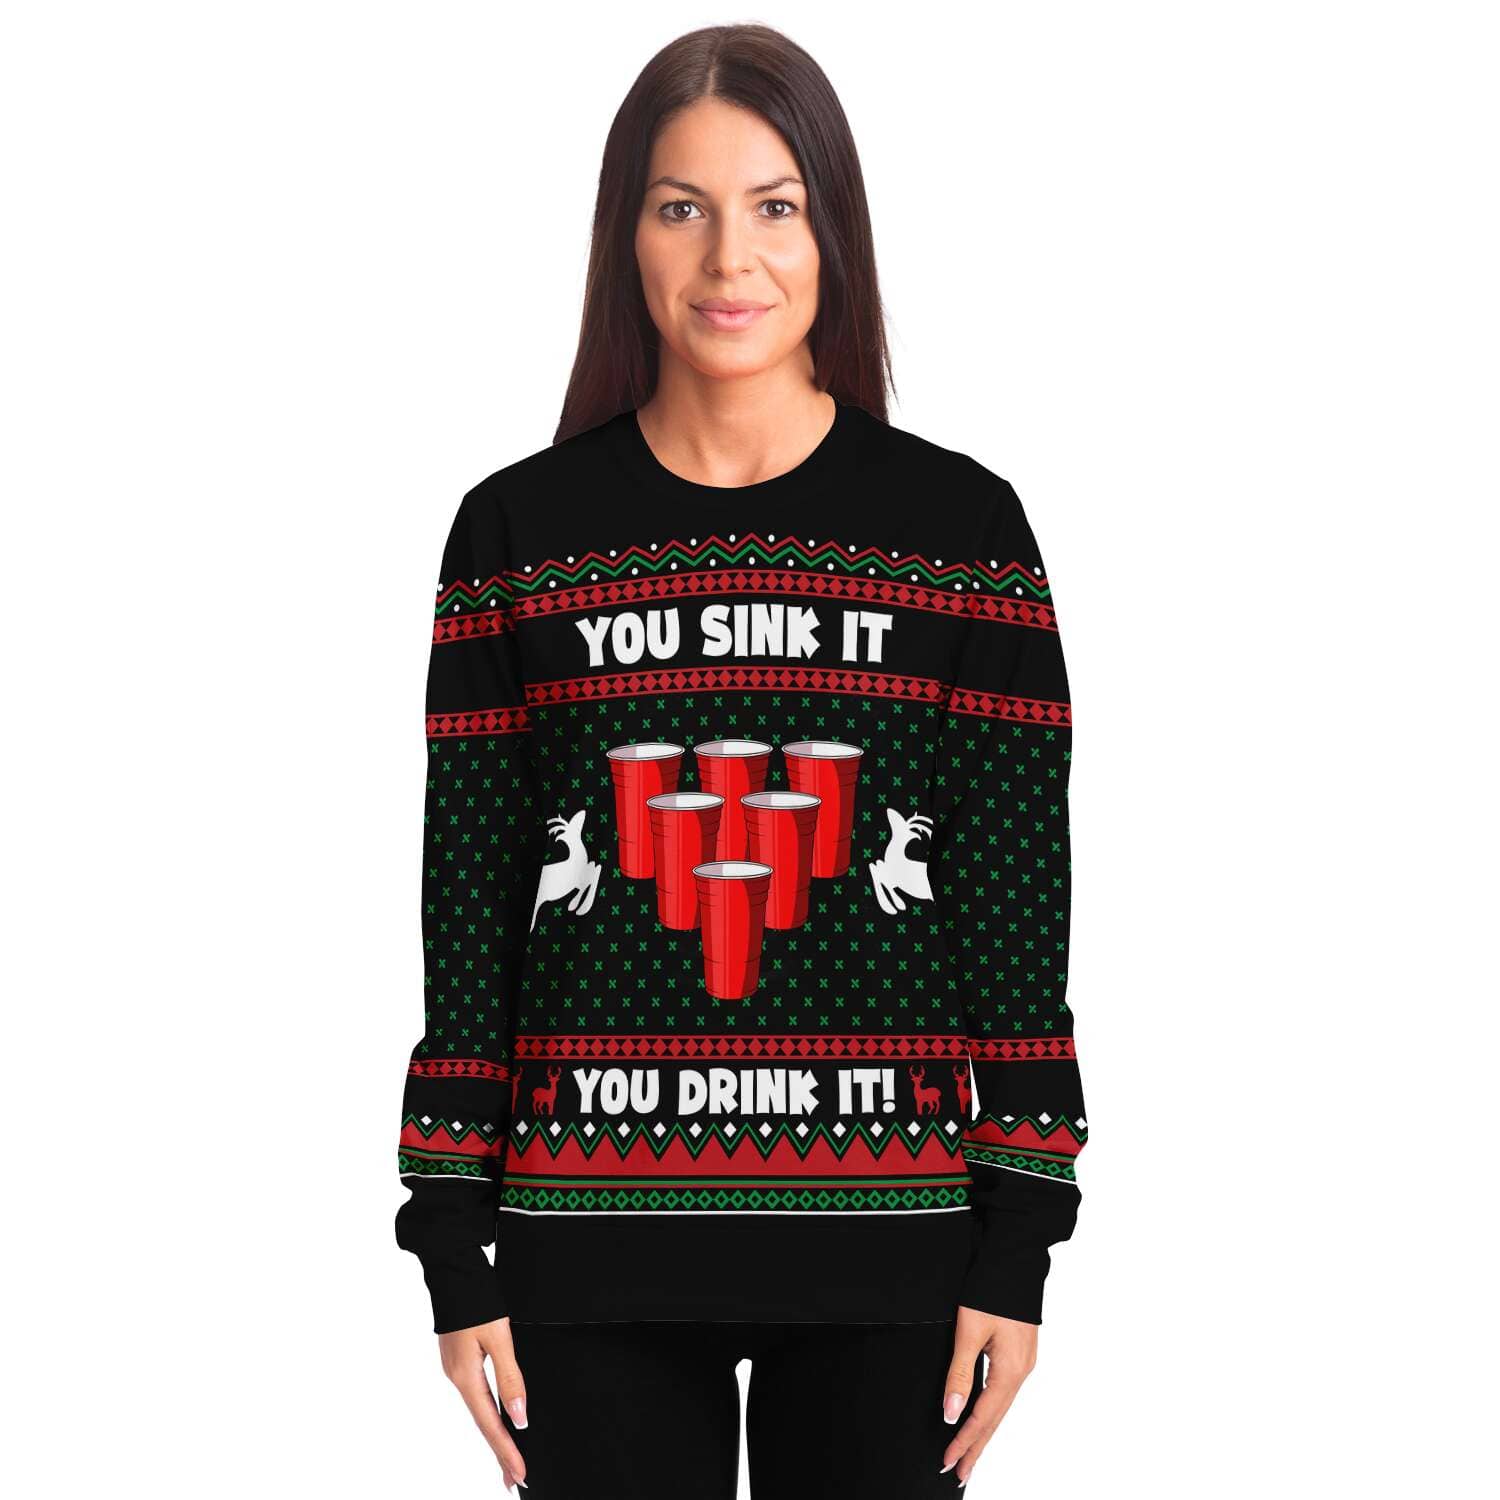 You Sink It You Drink It - Funny Beer Pong Ugly Christmas Sweater (Sweatshirt)